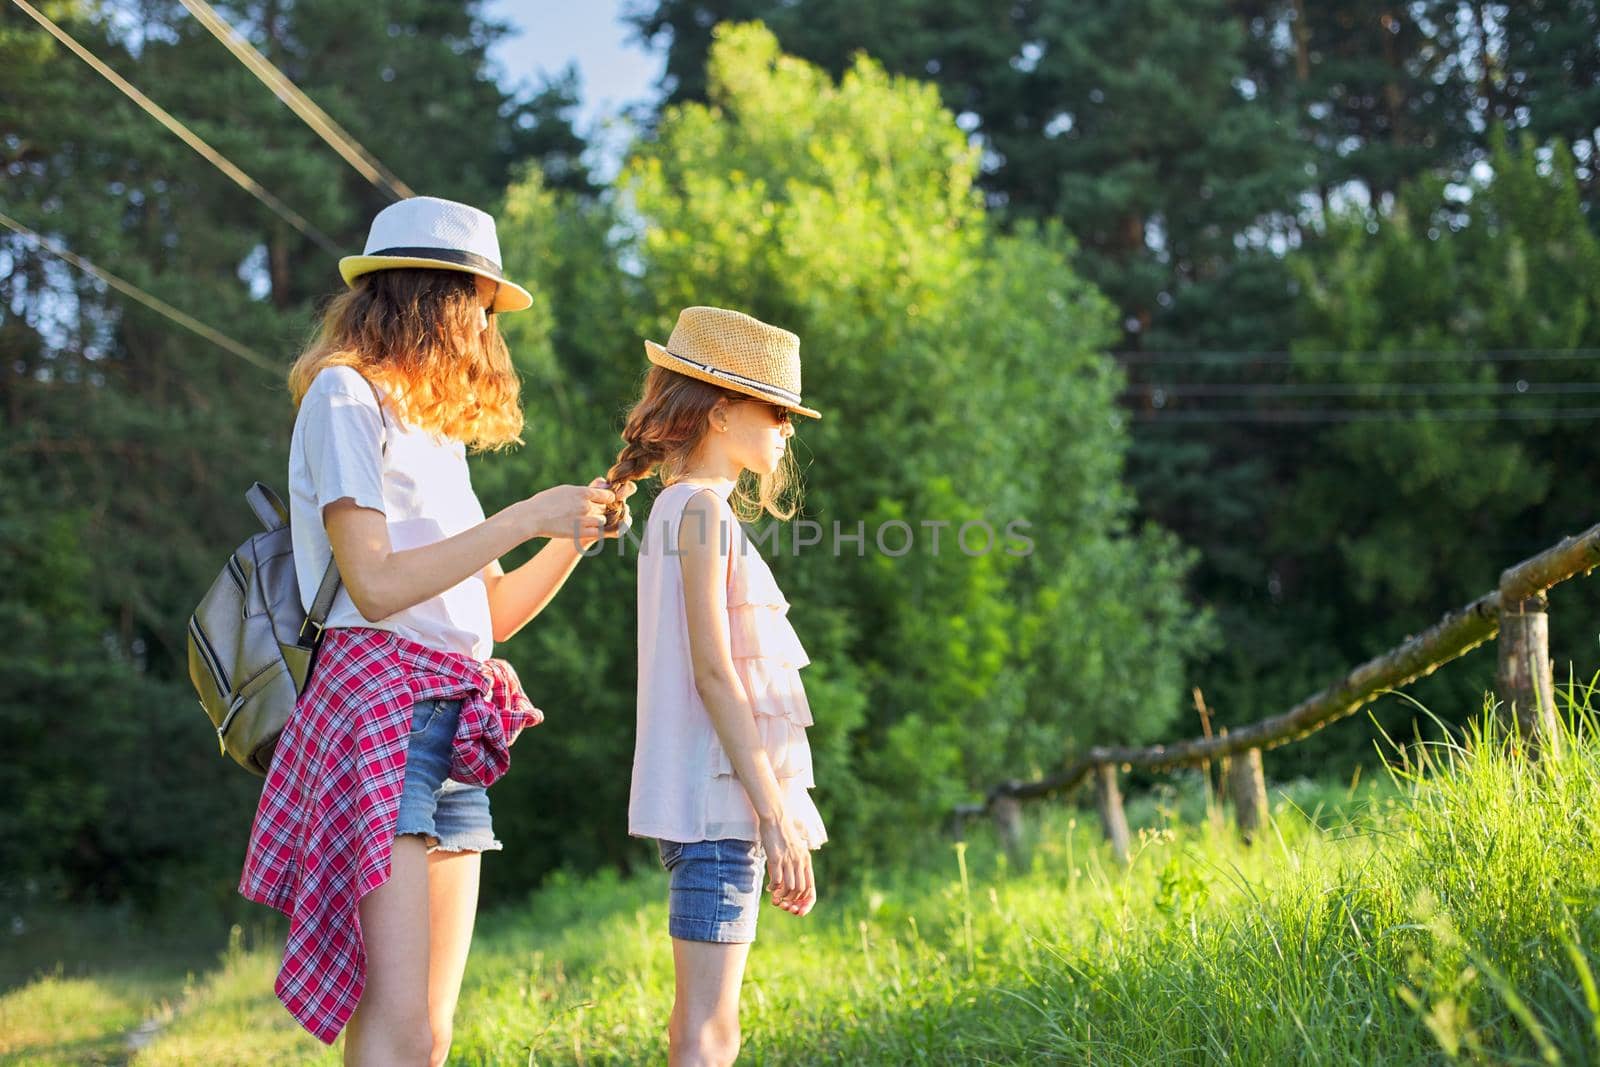 Summer, happy kids walking enjoying nature vacation, older sister braids her younger hair.